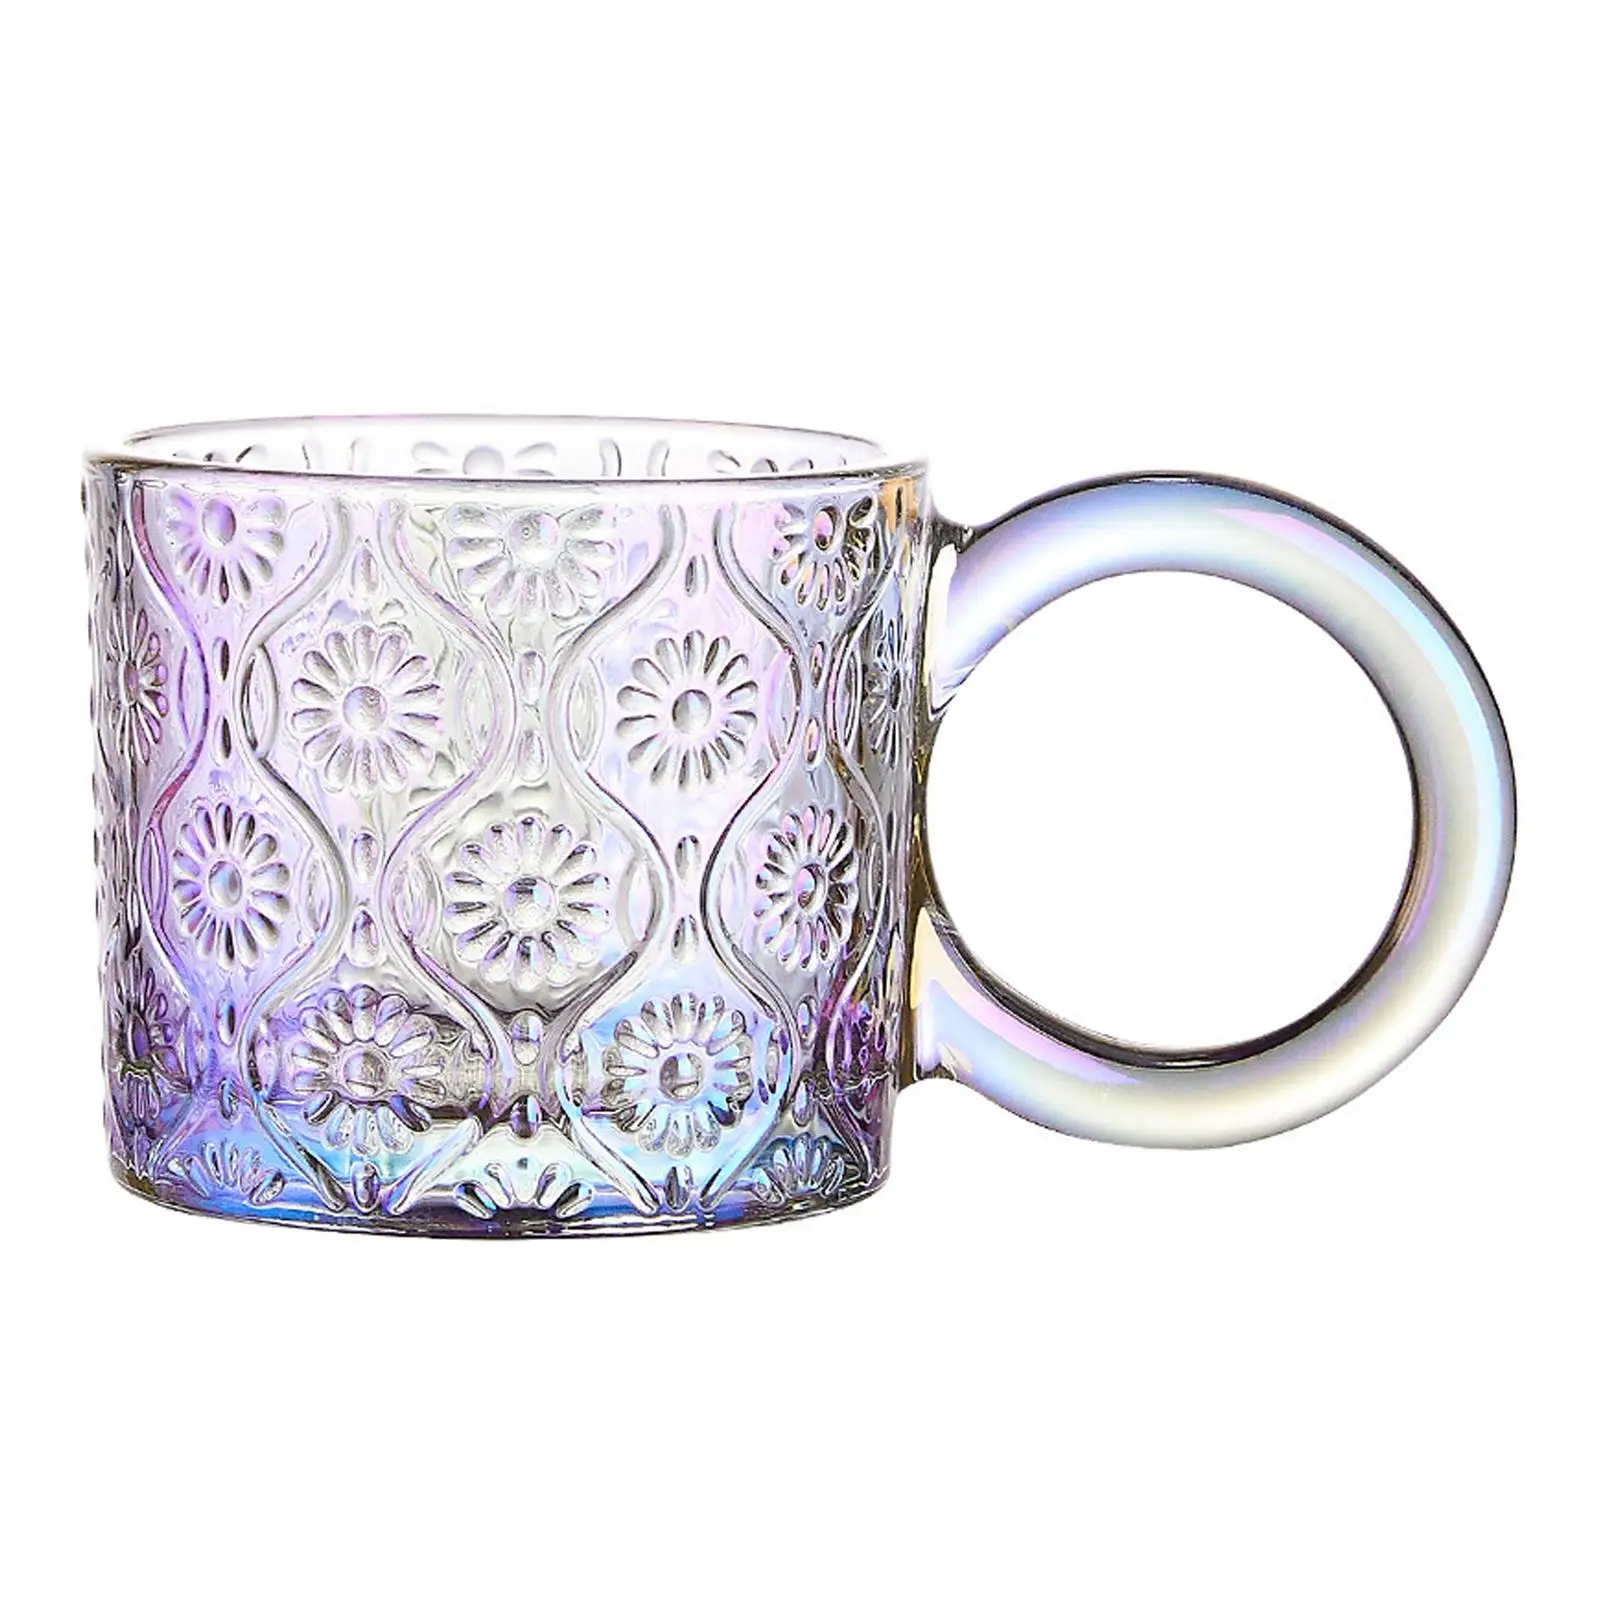 2x Coffee Mug 250ml Latte Mug Heat Resistant Drinkware for Home